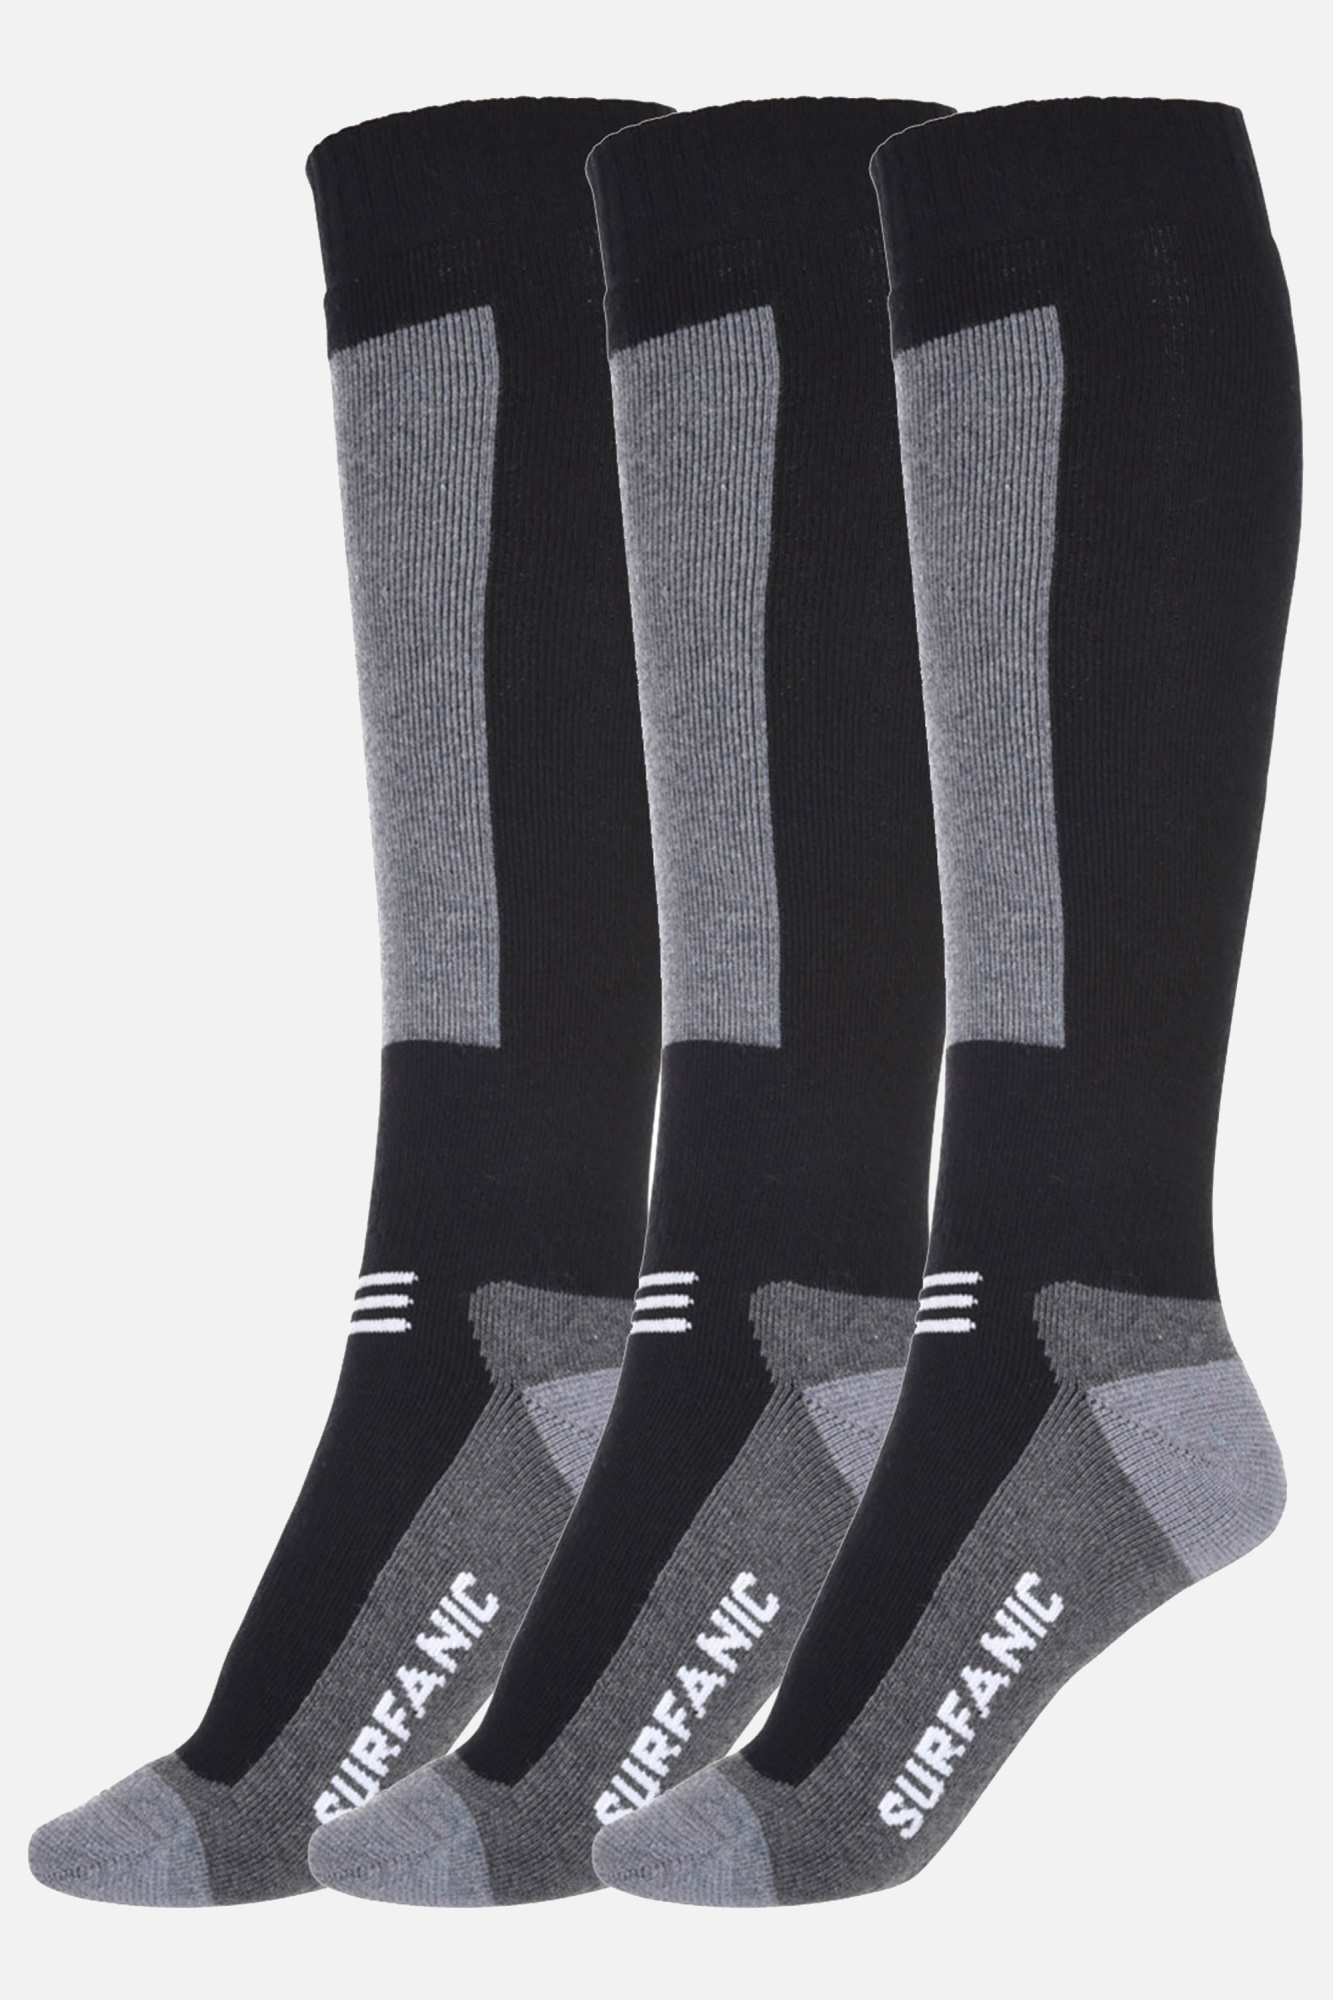 Surfanic Mens Endurance Merino 3 Pack Sock Black - Size: 12-3